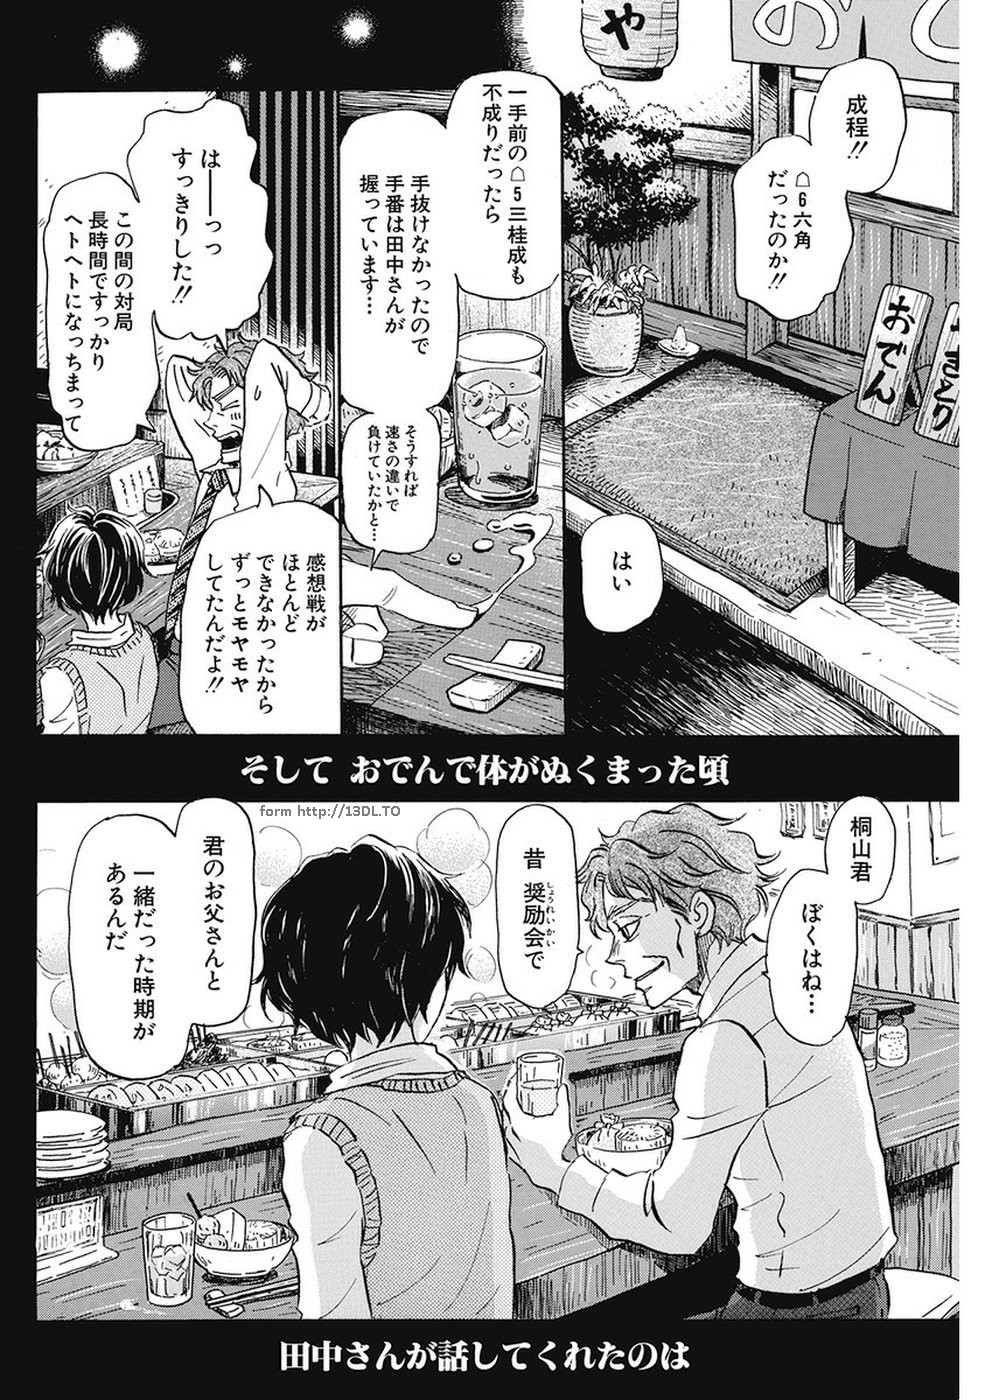 3 Gatsu no Lion - Chapter 166 - Page 4